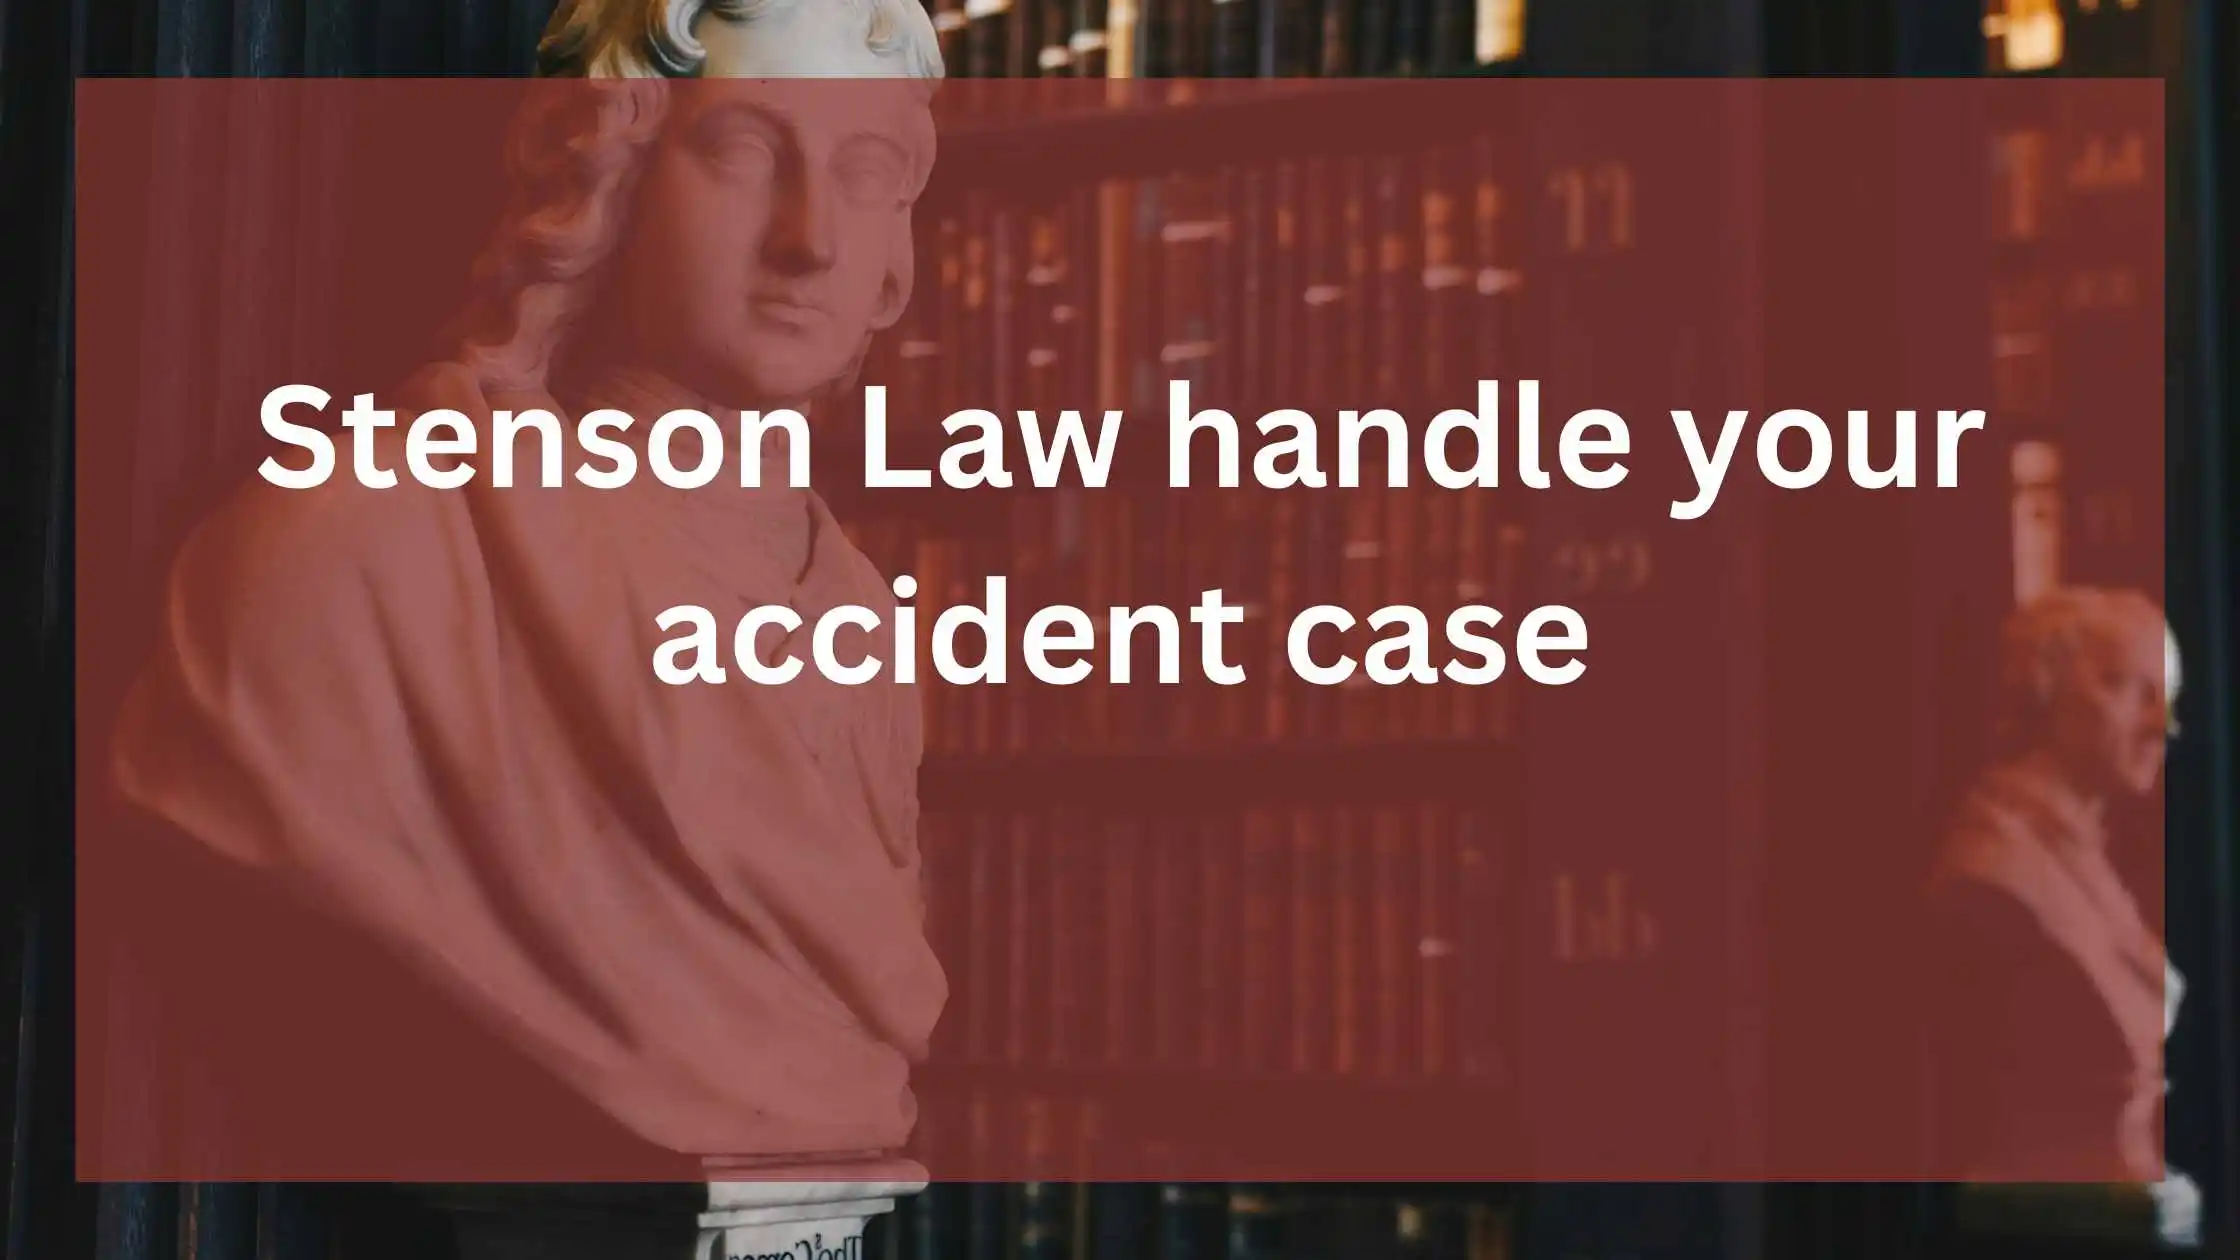 Personal Injury Attorneys at John W. Stenson